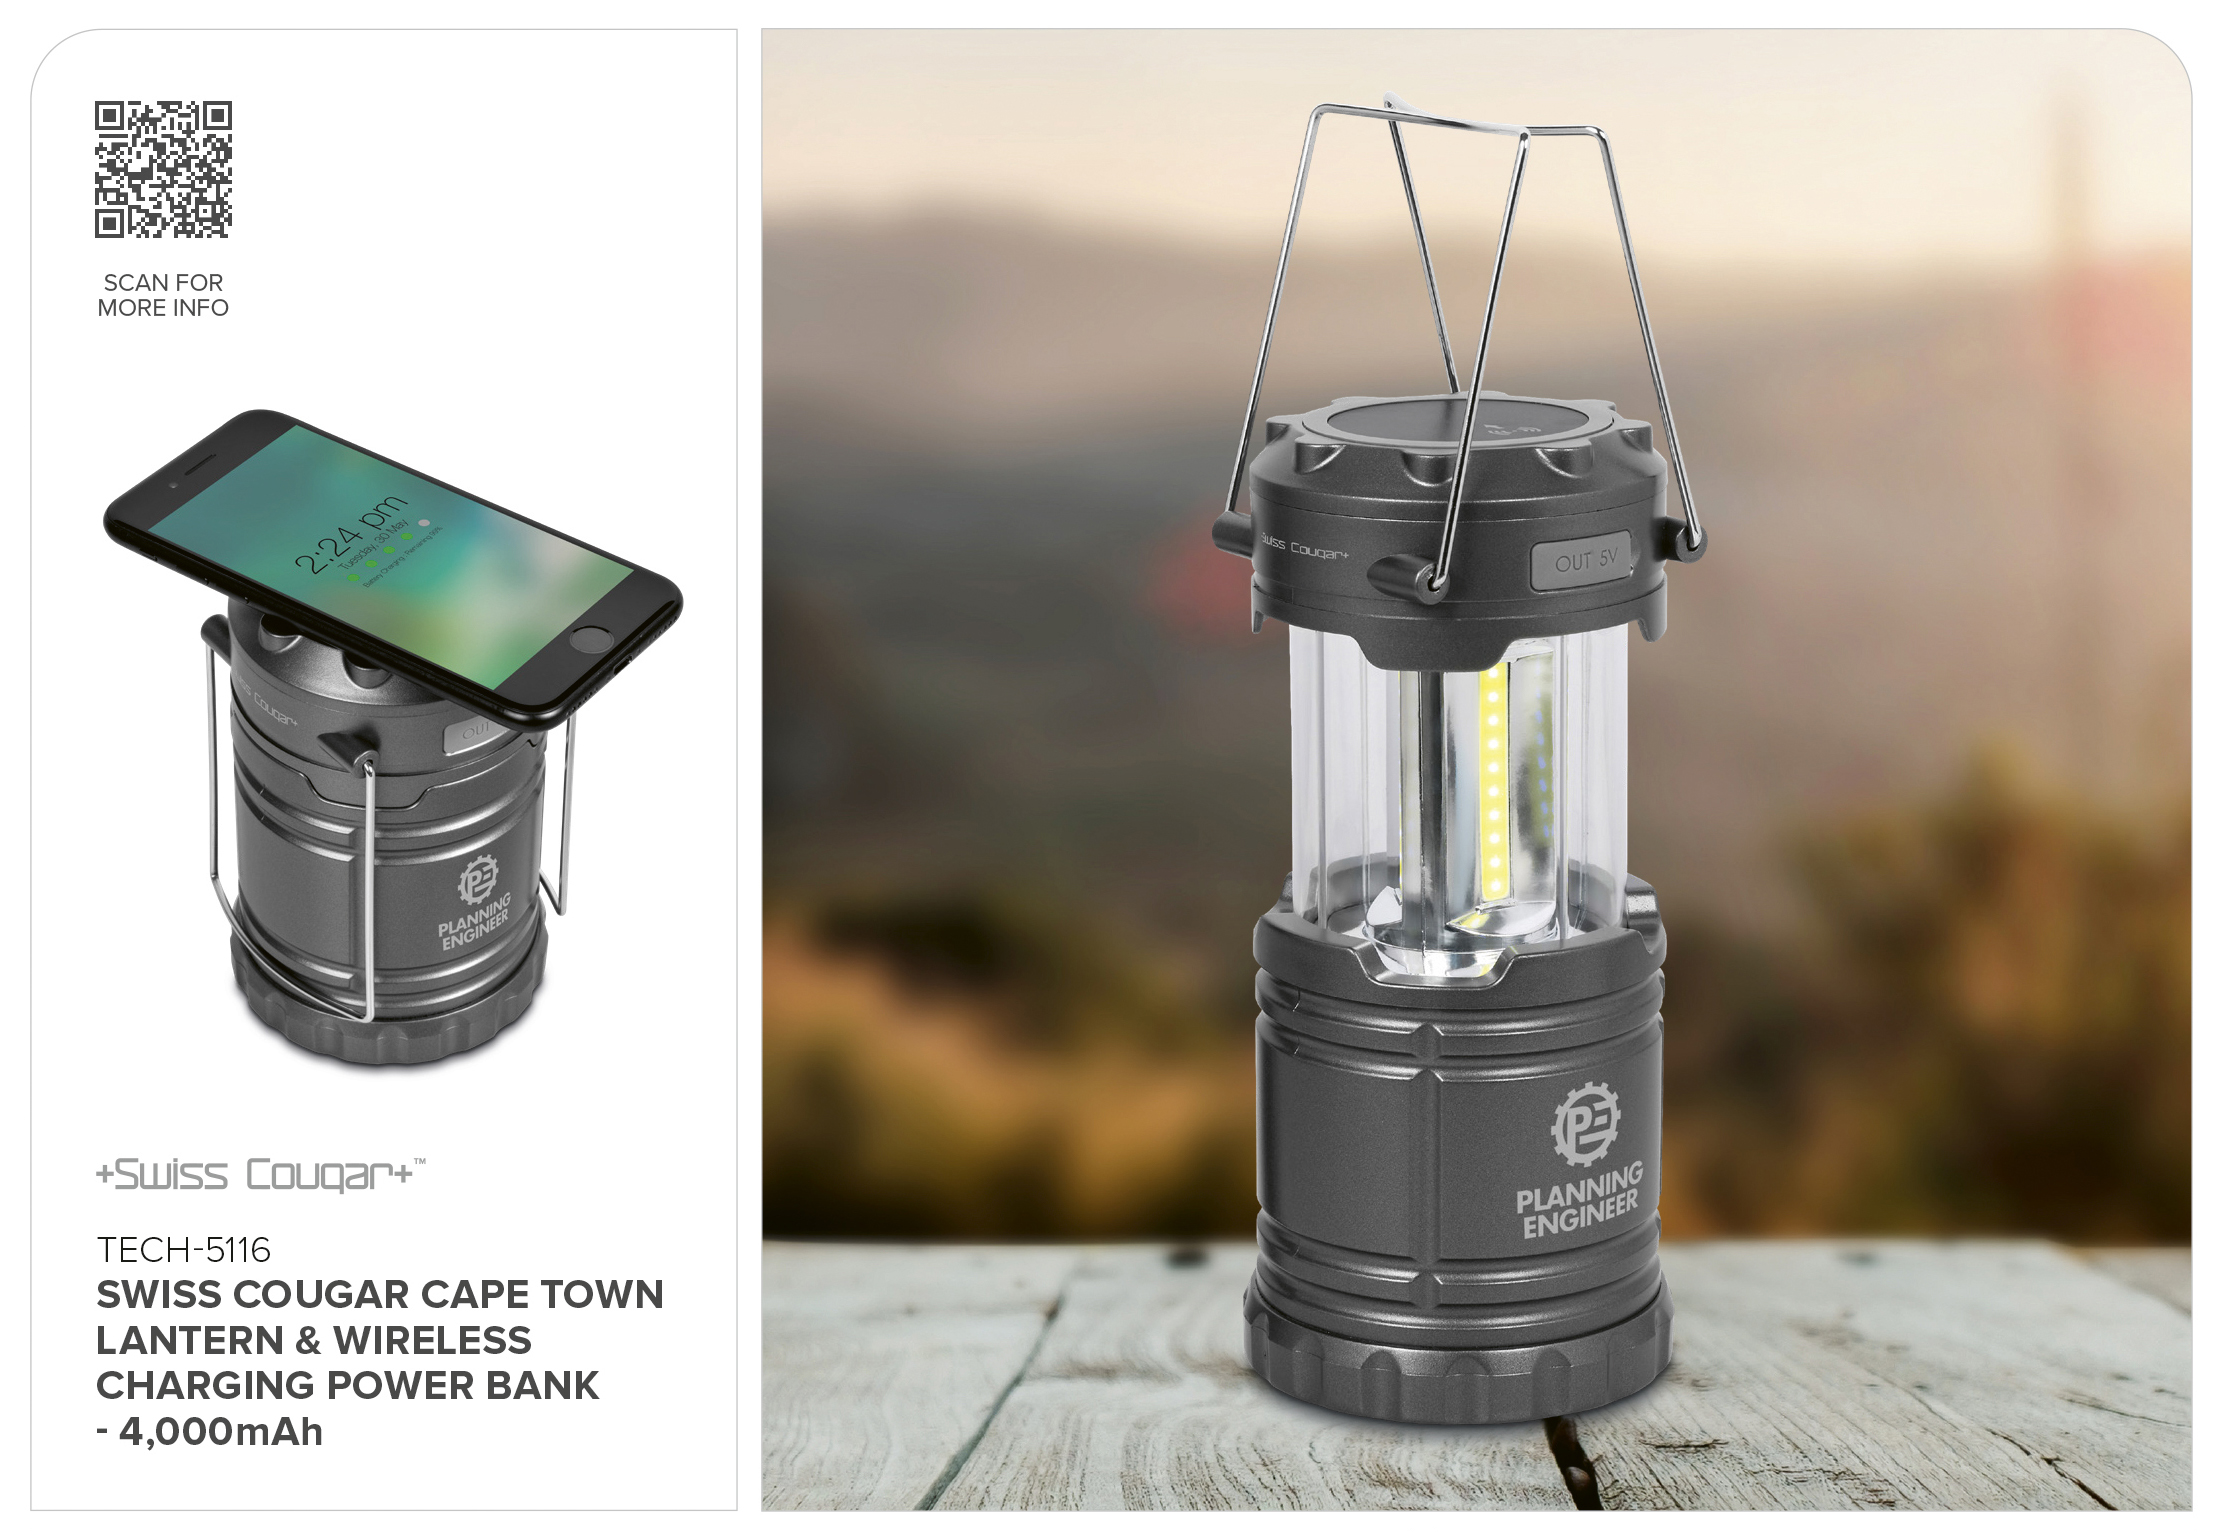 TECH-5116 - Swiss Cougar Cape Town Lantern & Wireless Charging Power Bank - 4,000mAh - Catalogue Image